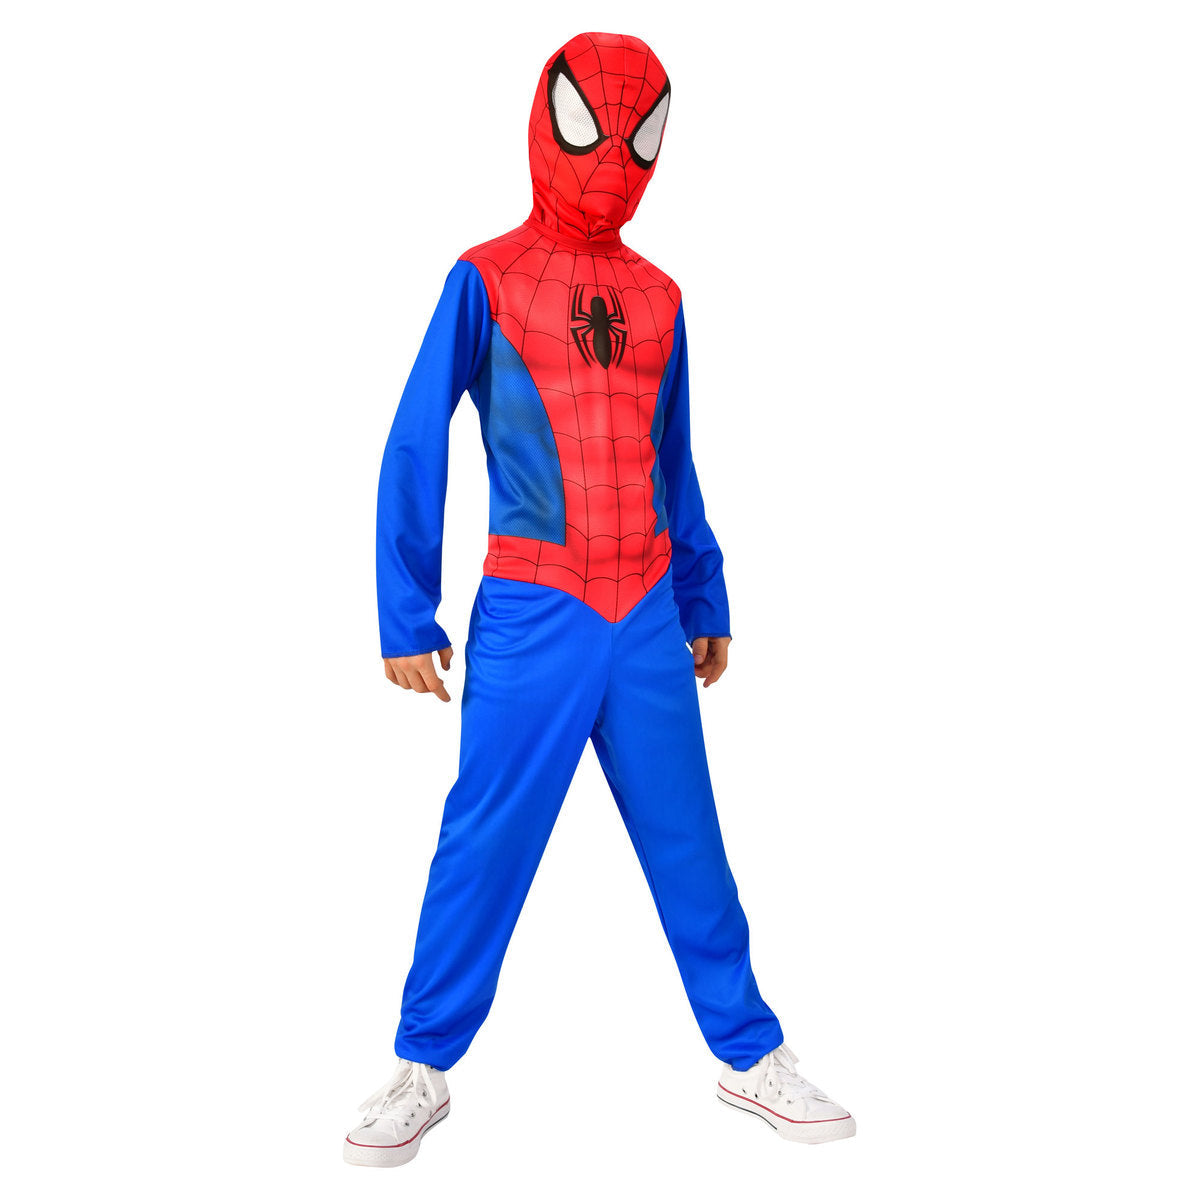 Spider-Man Dress Up Costume